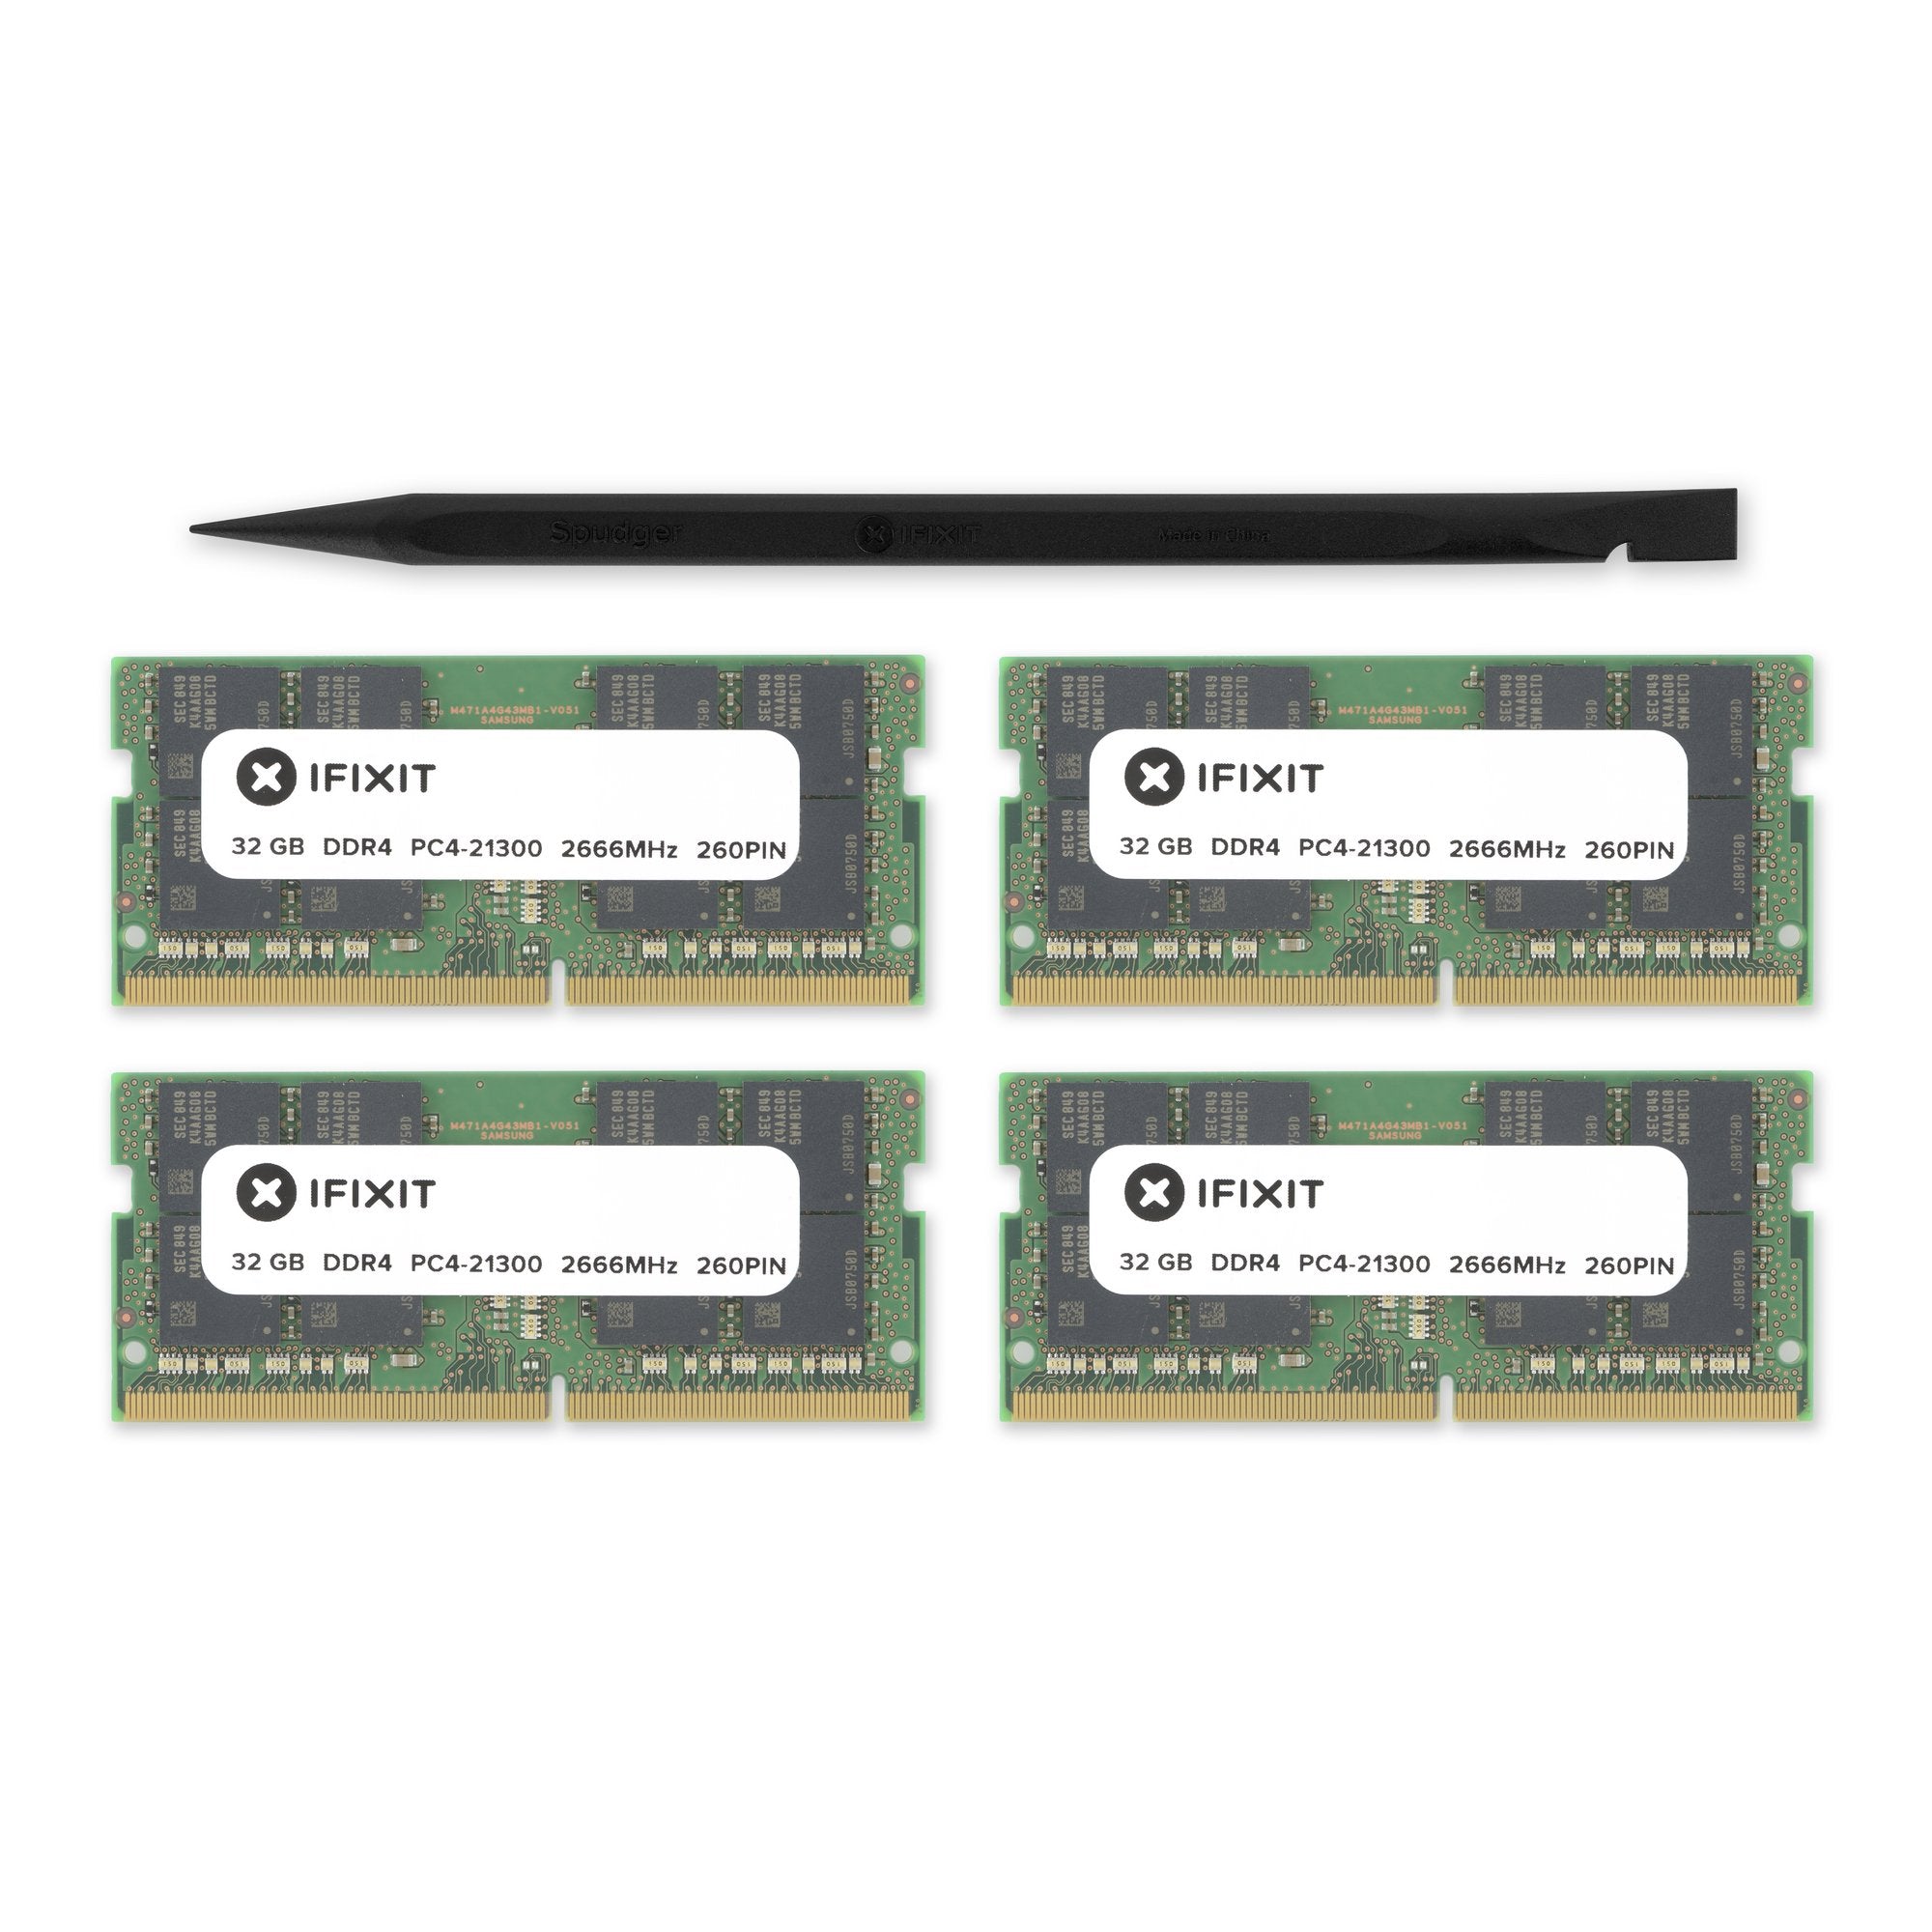 iMac Intel 27" EMC 3194 (2019, 5K Display) Memory Maxxer RAM Upgrade Kit New